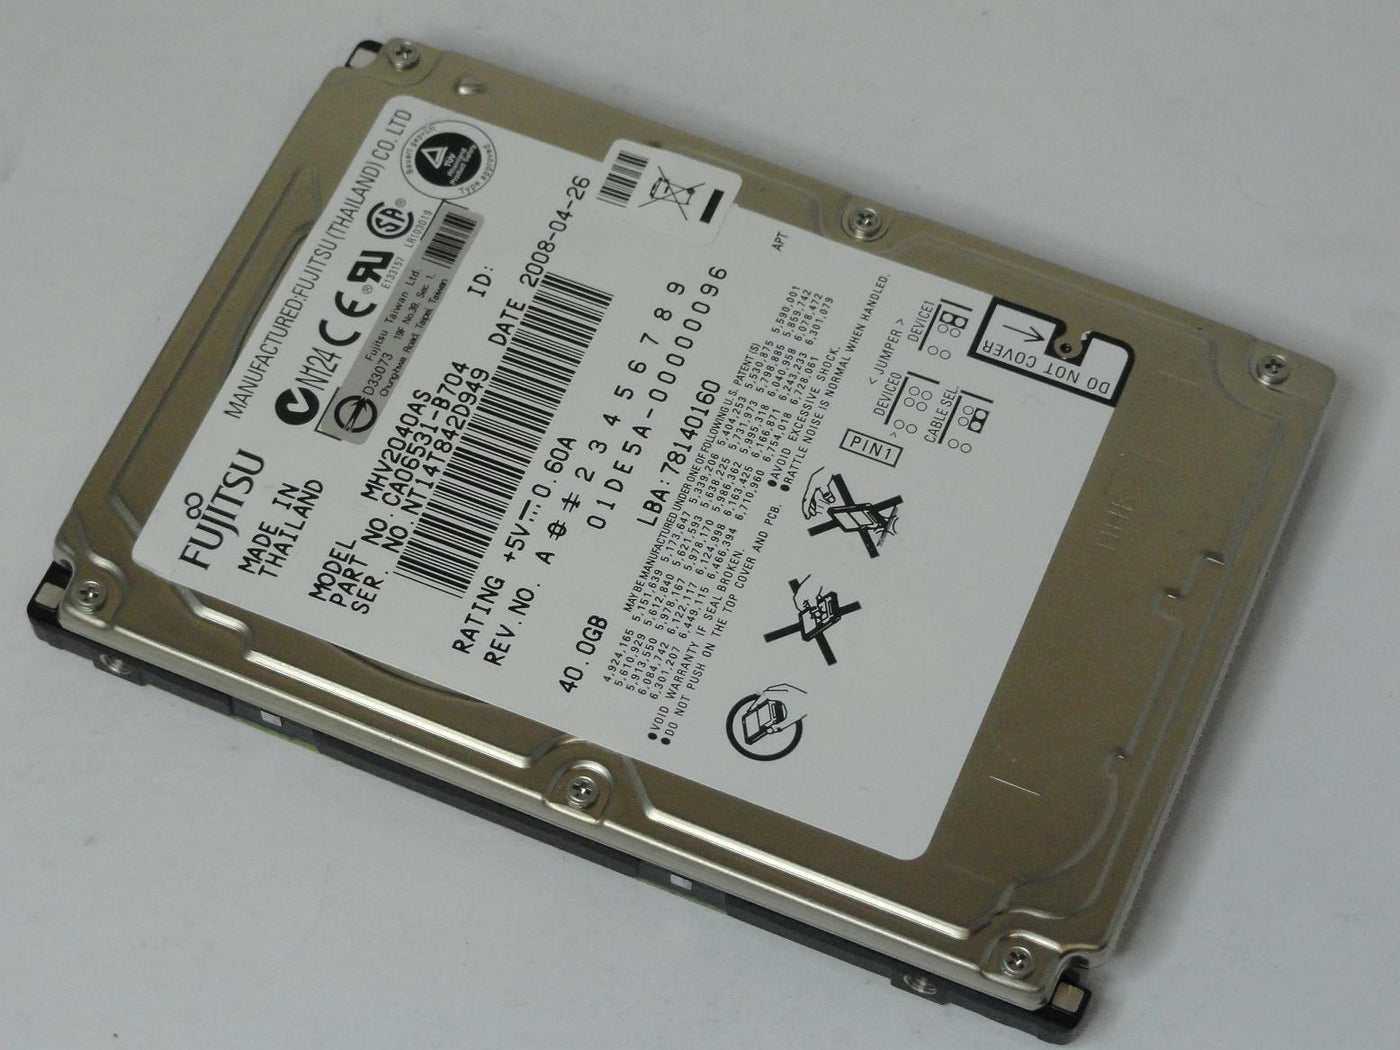 CA06531-B704 - Fujitsu 40GB IDE 5400rpm 2.5in HDD - Refurbished